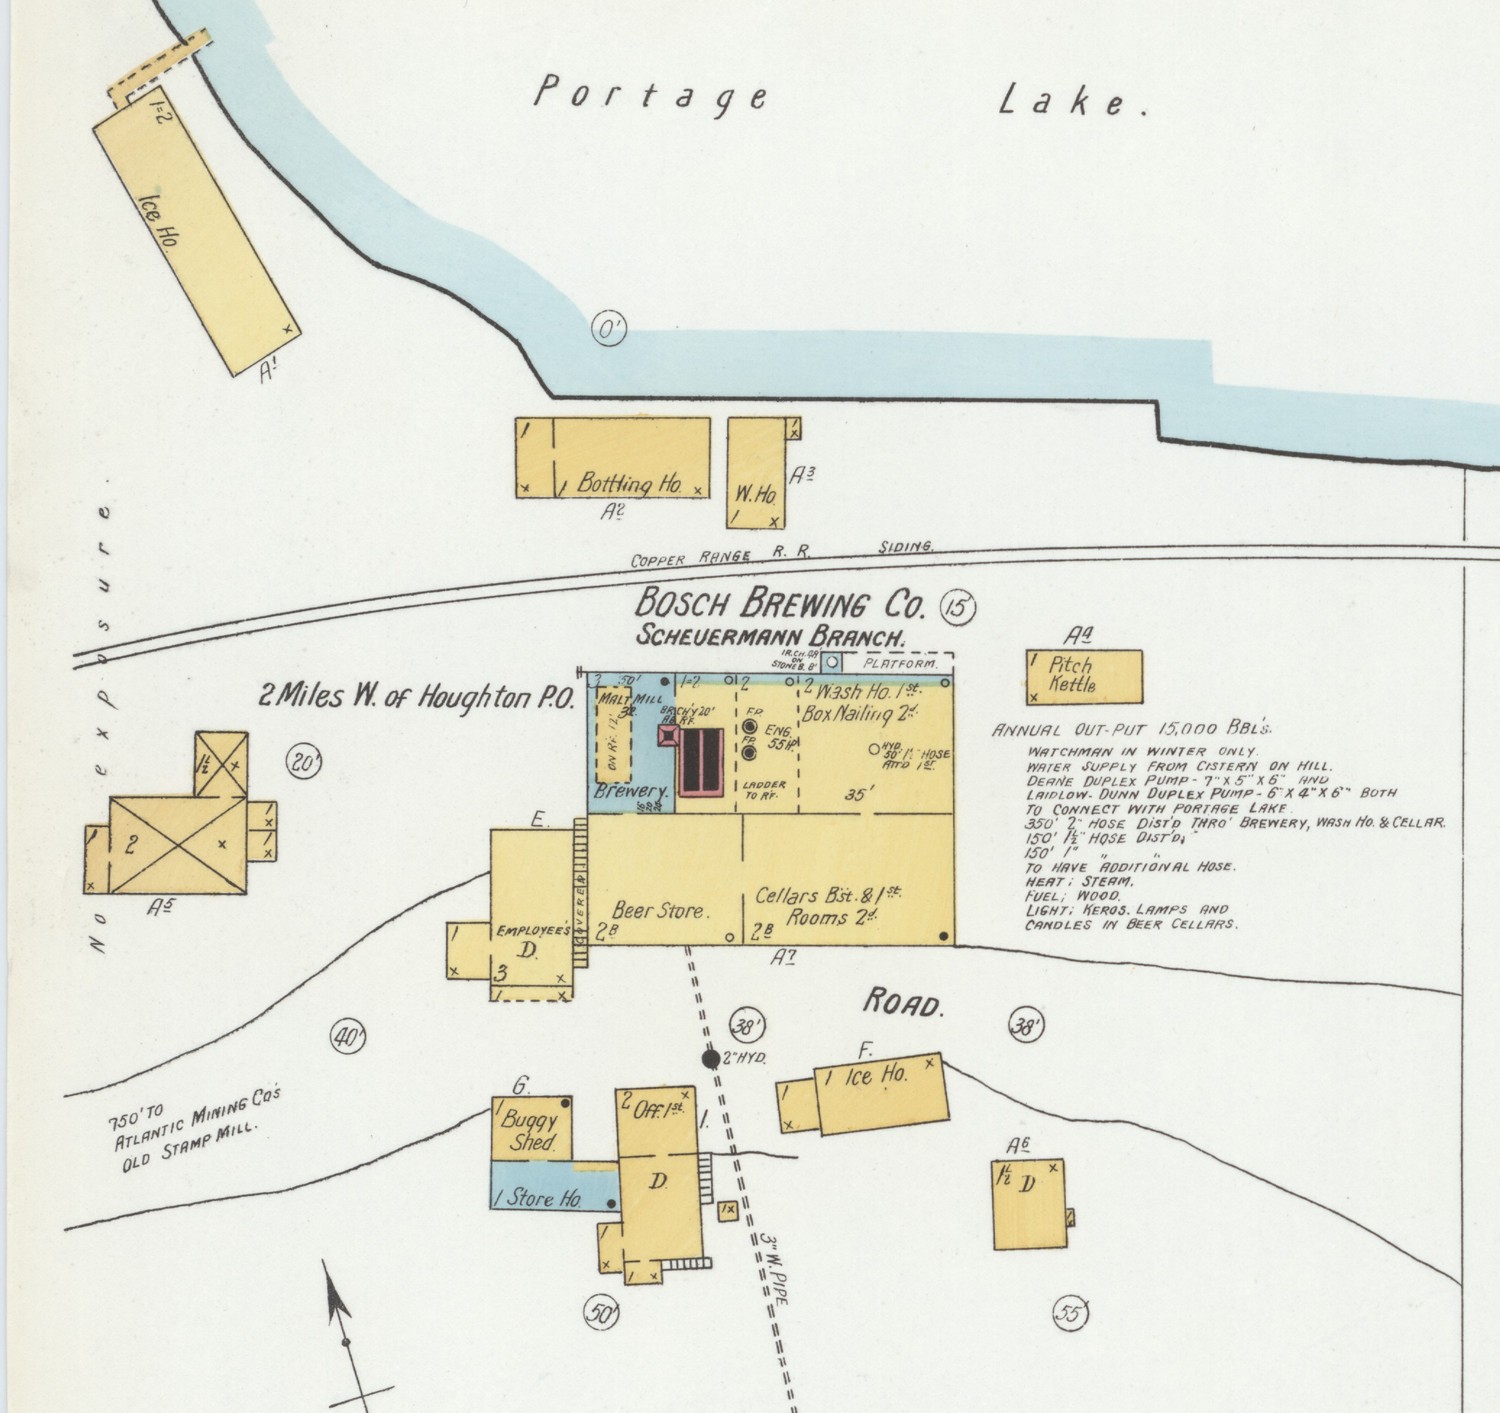 Sanborn map - June 1900